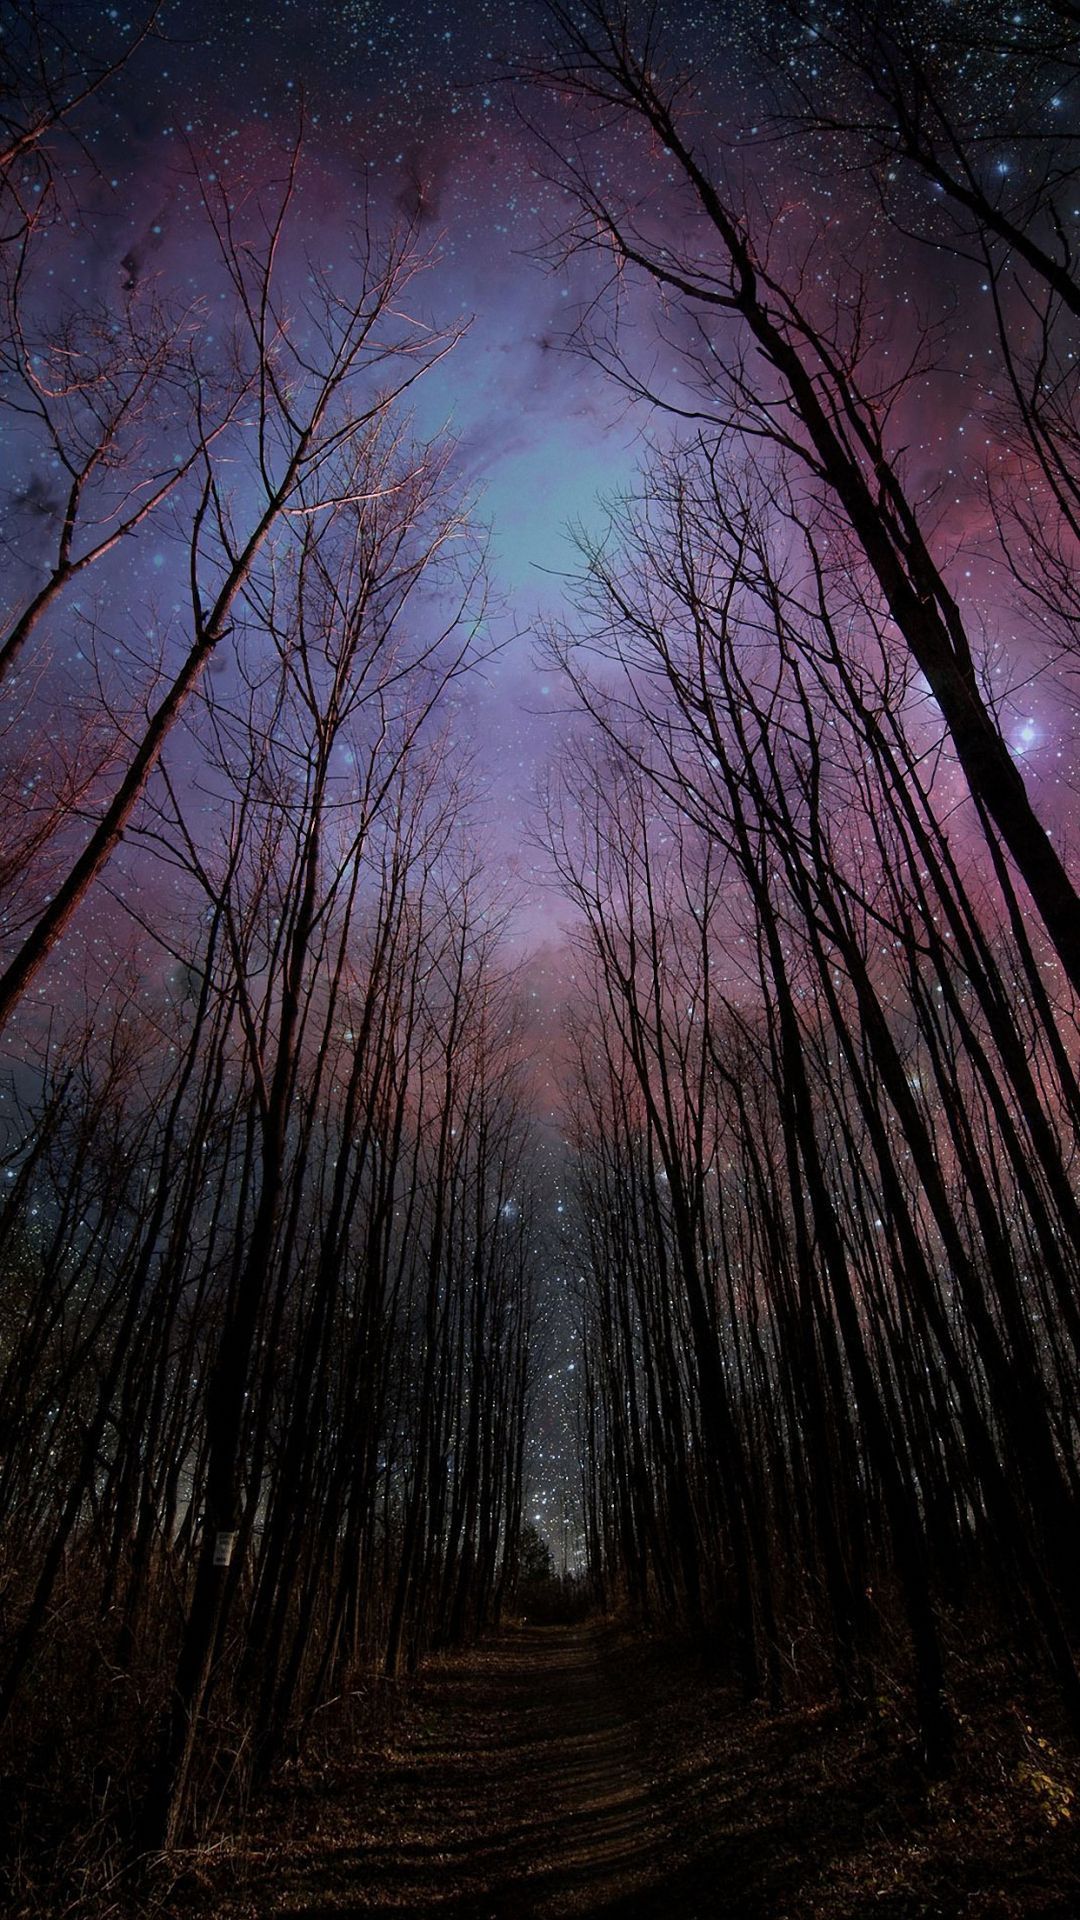 HD fantasy night sky iPhone 6 / 6s / Plus wallpaper, nature